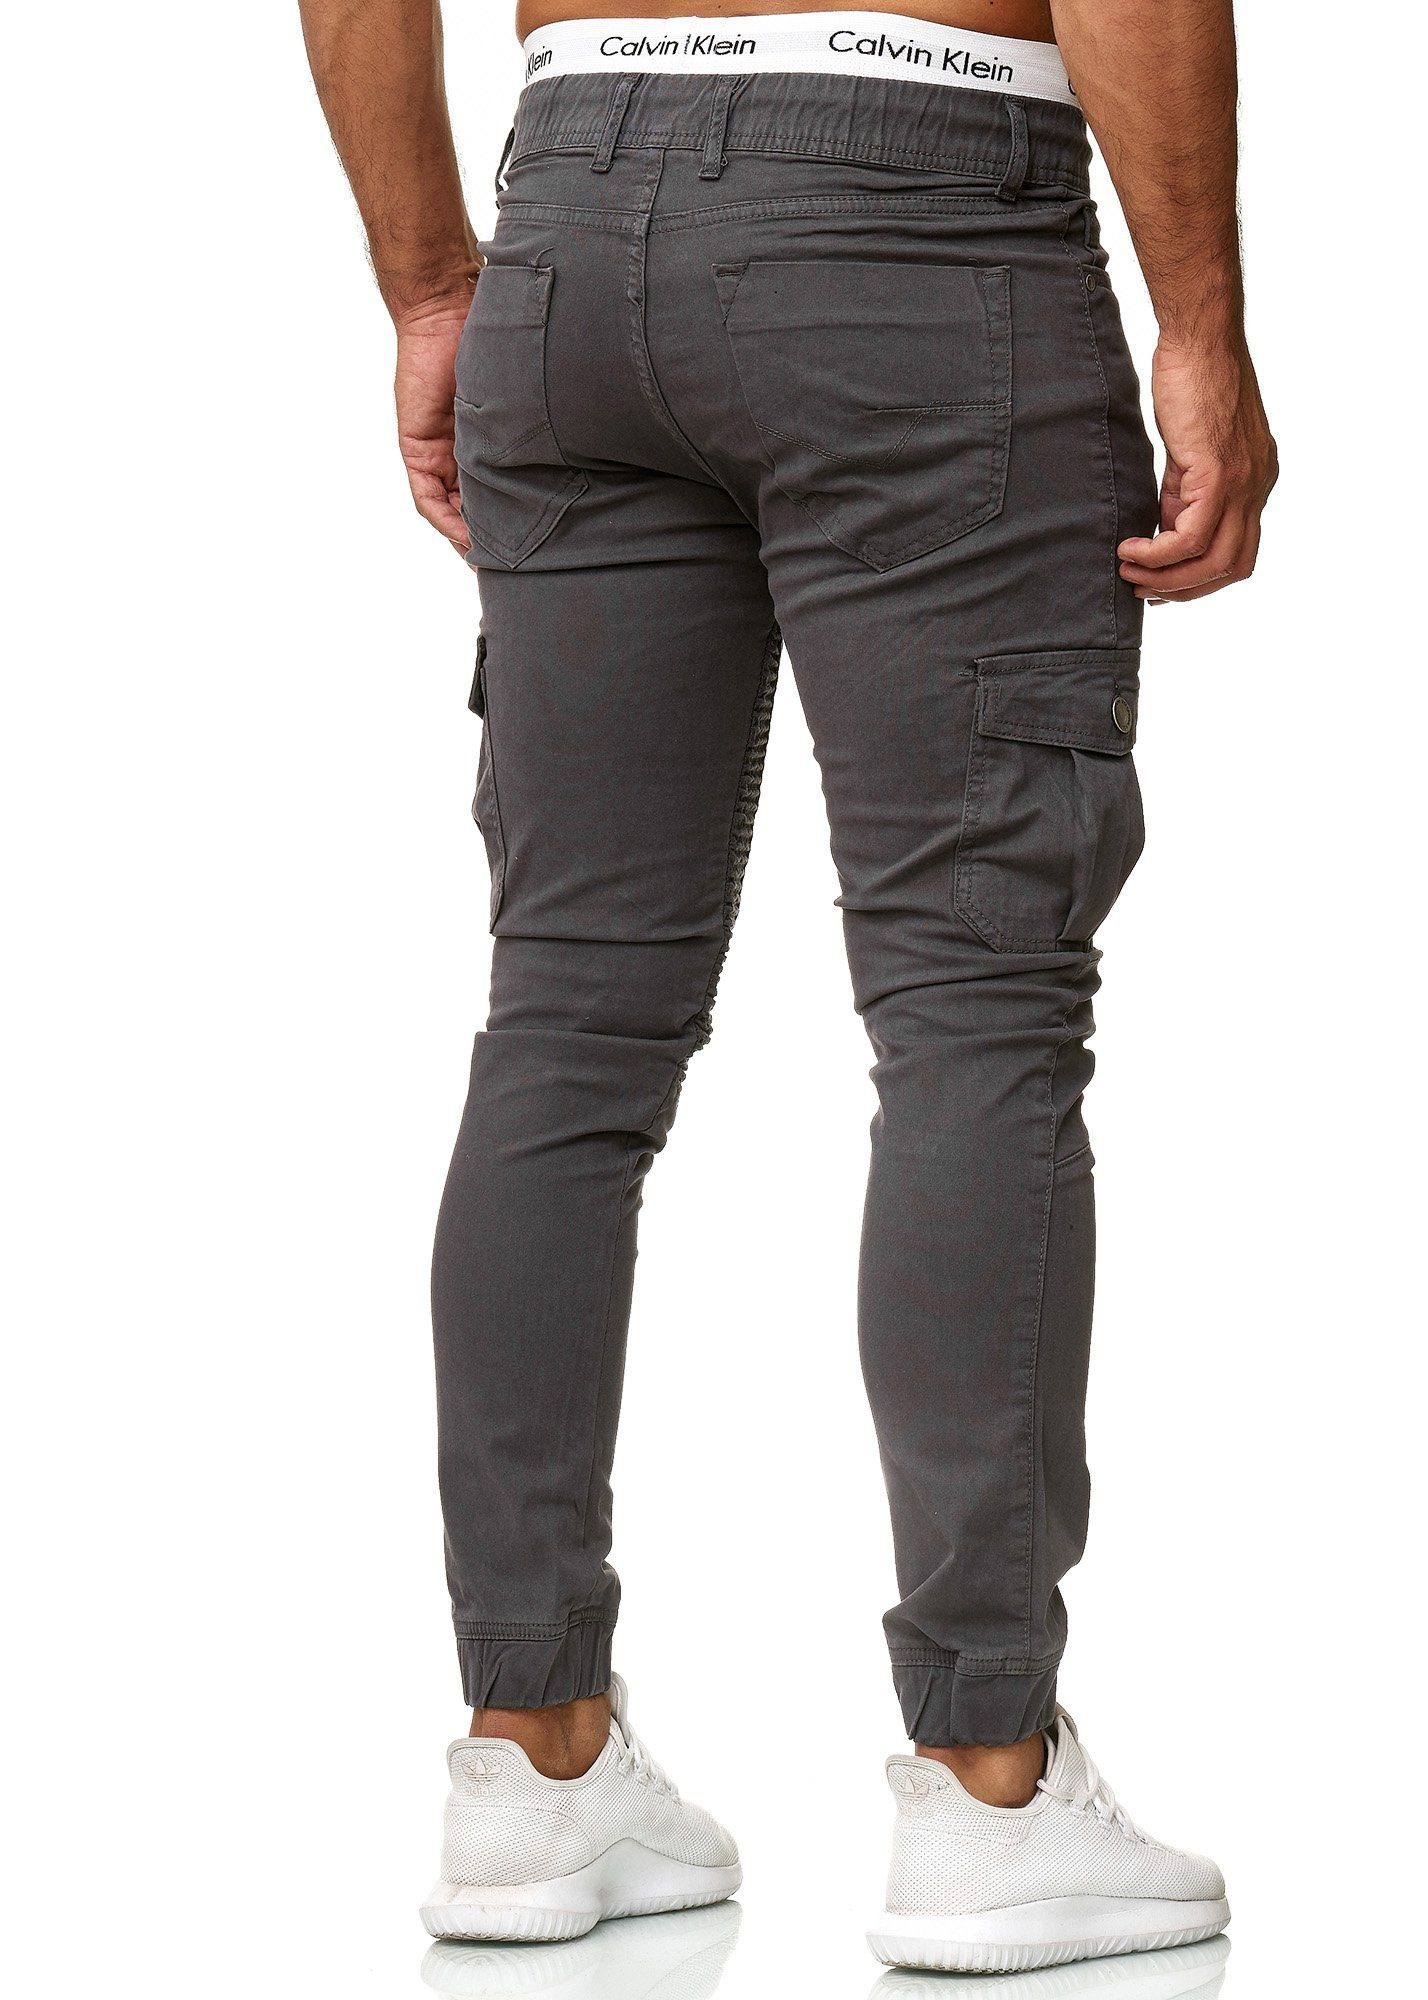 Slim Jeans Hose Männer Slim Chino Herren Fit Code47 3207C Slim-fit-Jeans Designer Chinohose Antrazit